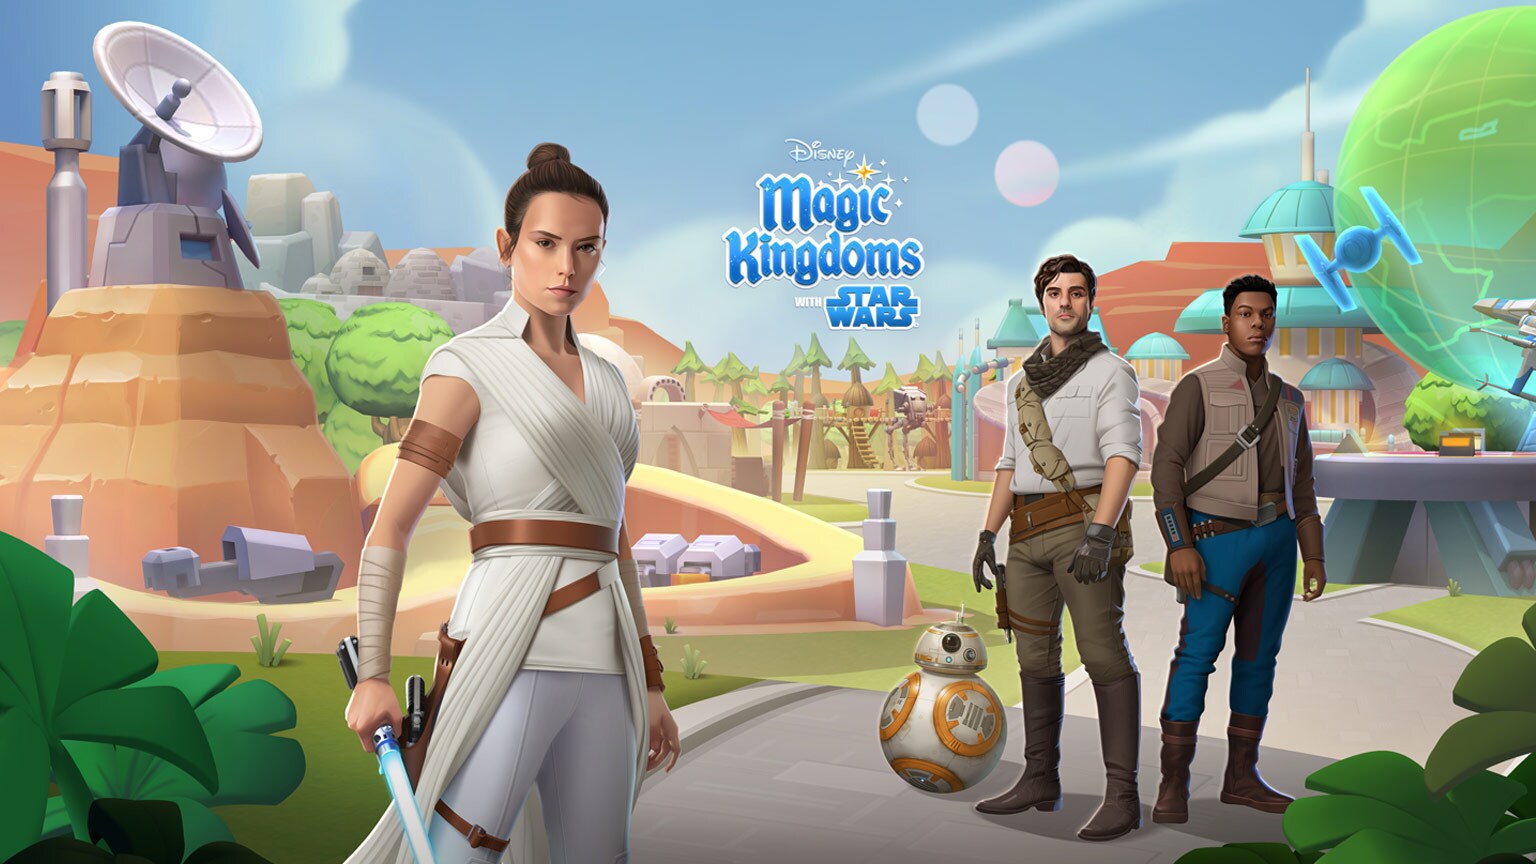 Star Wars Comes to Disney Magic Kingdoms